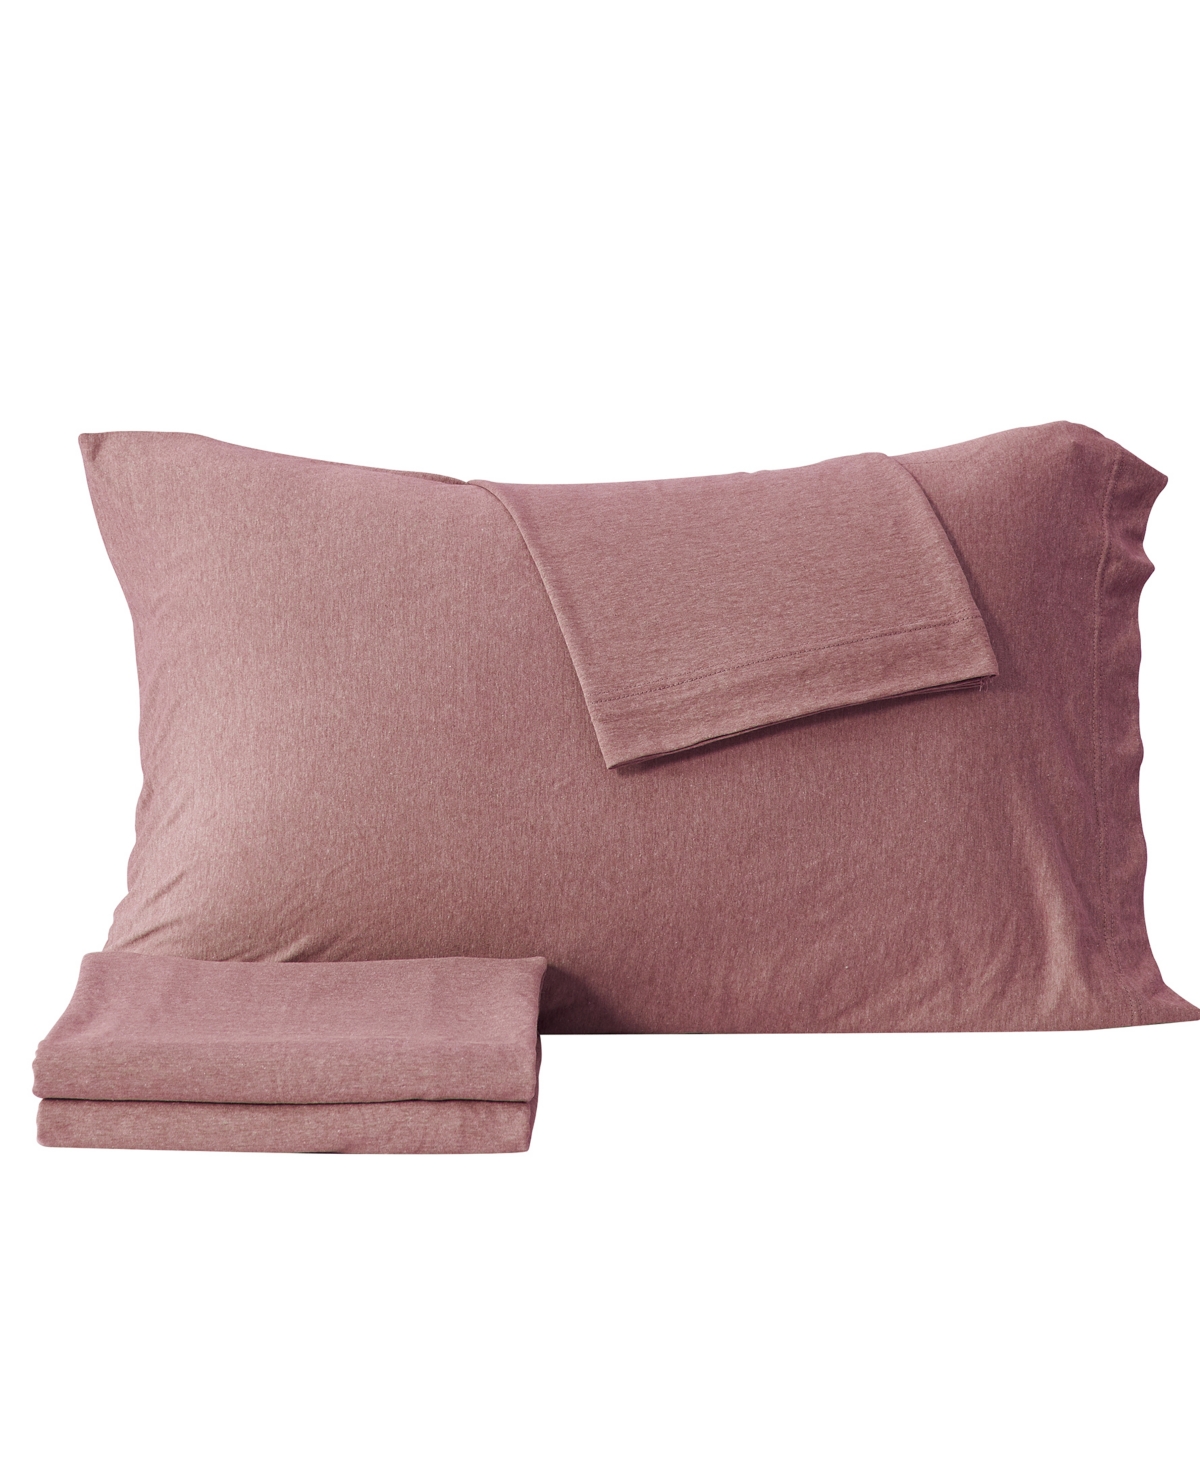 Premium Comforts Heathered Melange T-shirt Jersey Knit Cotton Blend 4 Piece Sheet Set, Twin Xl In Heathered Dusty Rose